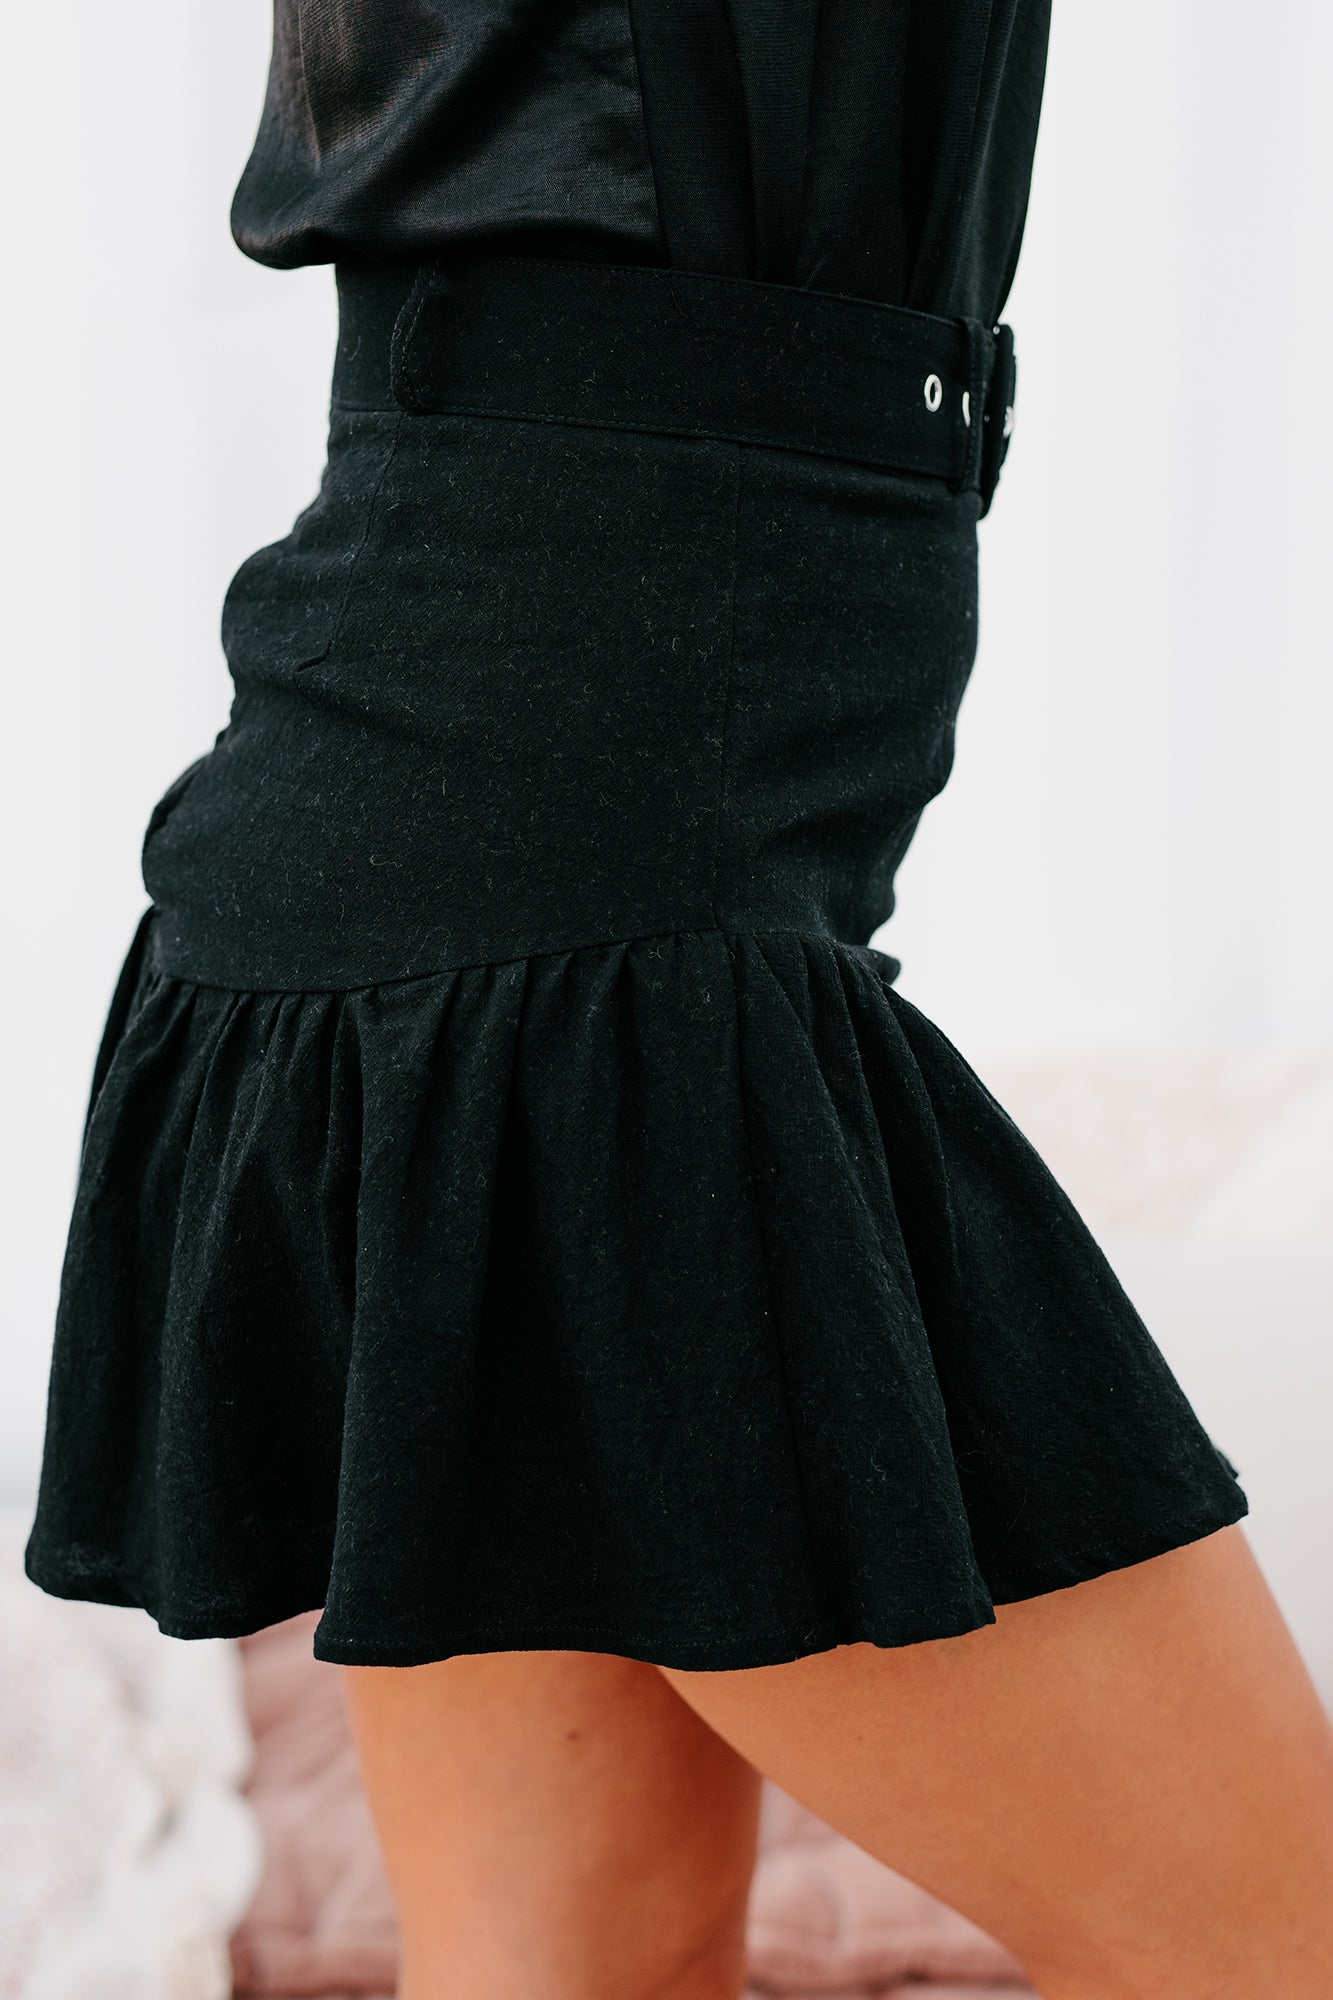 Destined For Date Night Long Sleeve Crop Top & Mini Skirt Set (Black) - NanaMacs